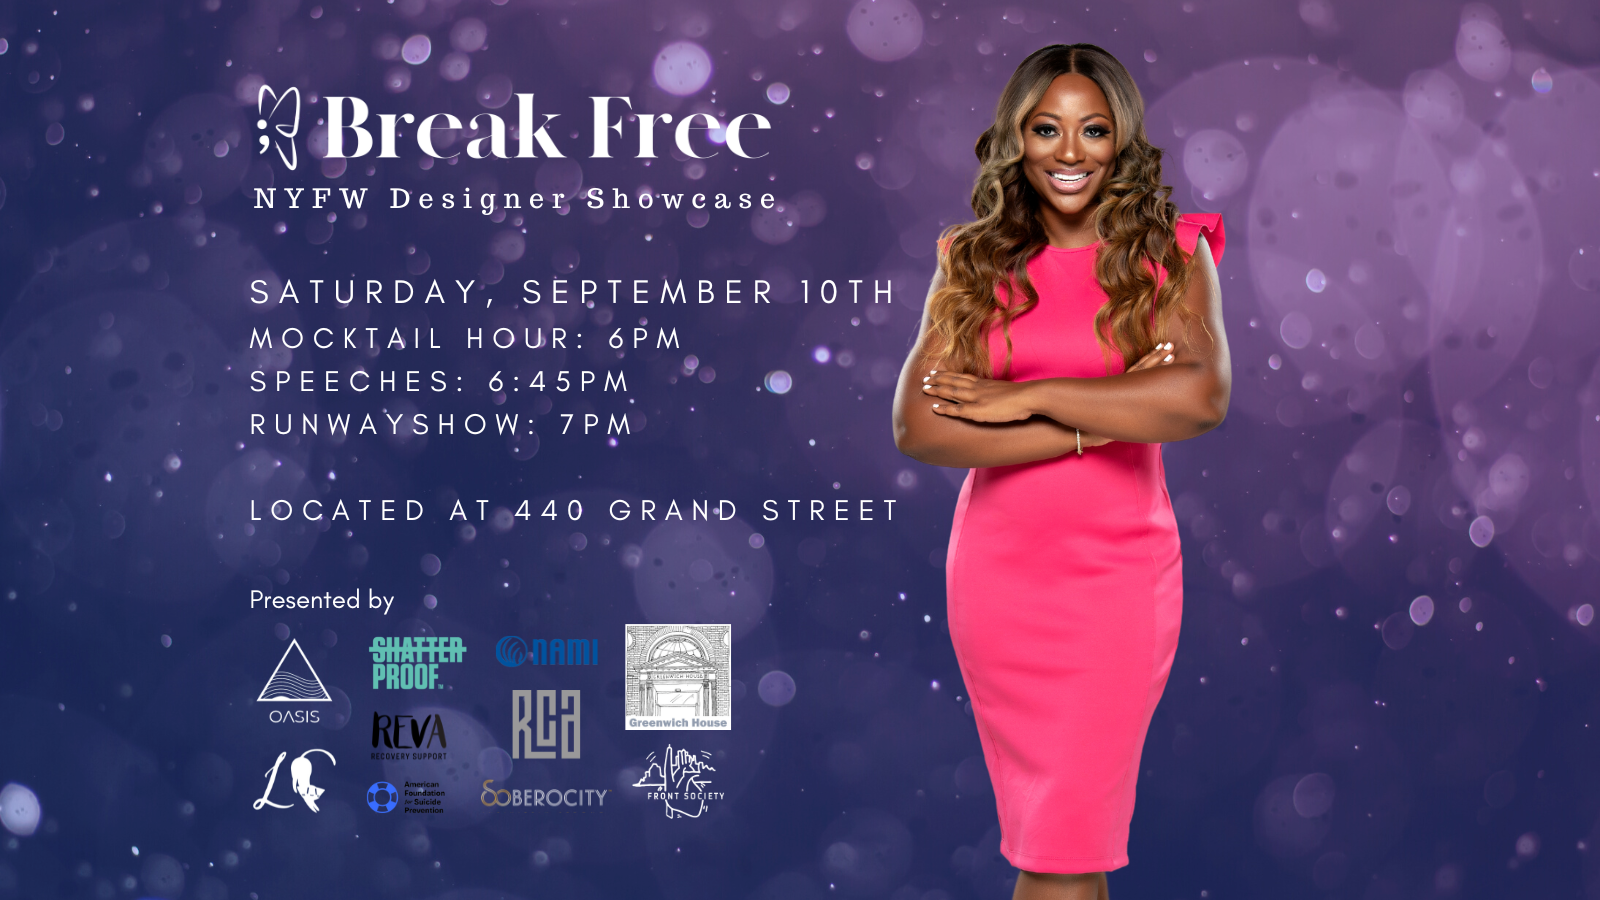 Break Free NYFW, LLC, Wednesday, September 7, 2022, Press release picture